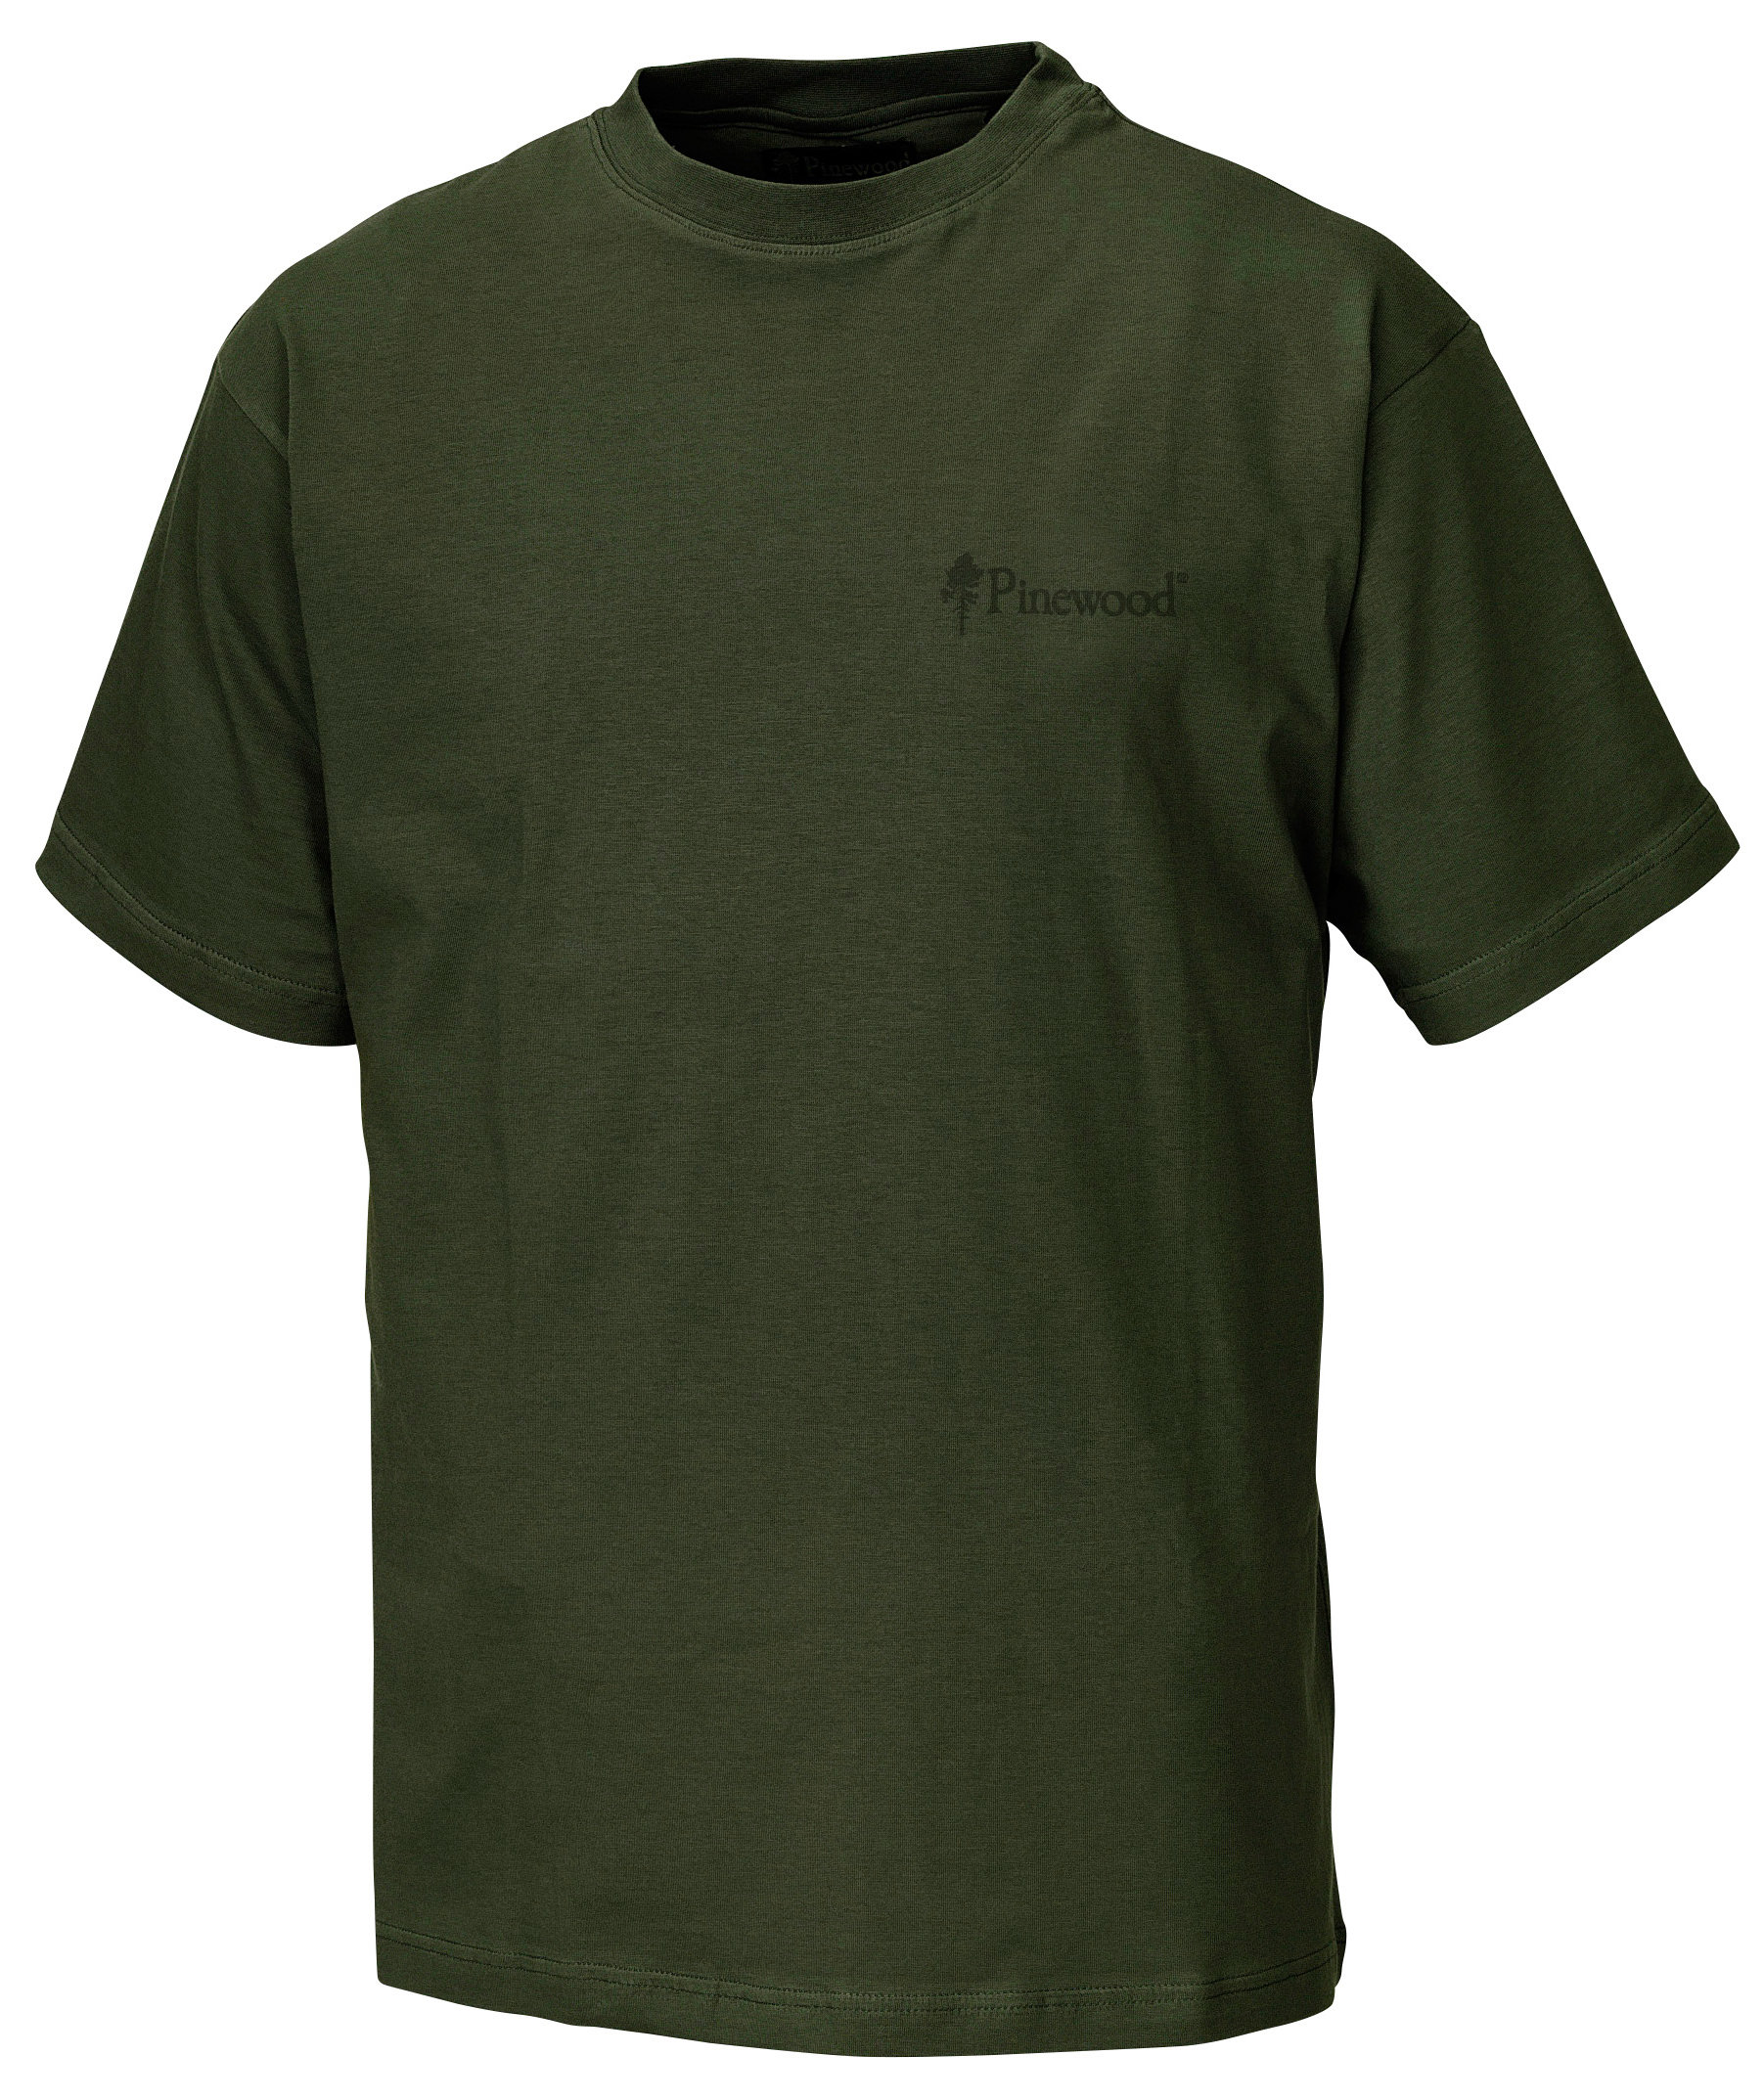 Pinewood Langarm Shirt Im Doppel-pack grün XL for sale online 